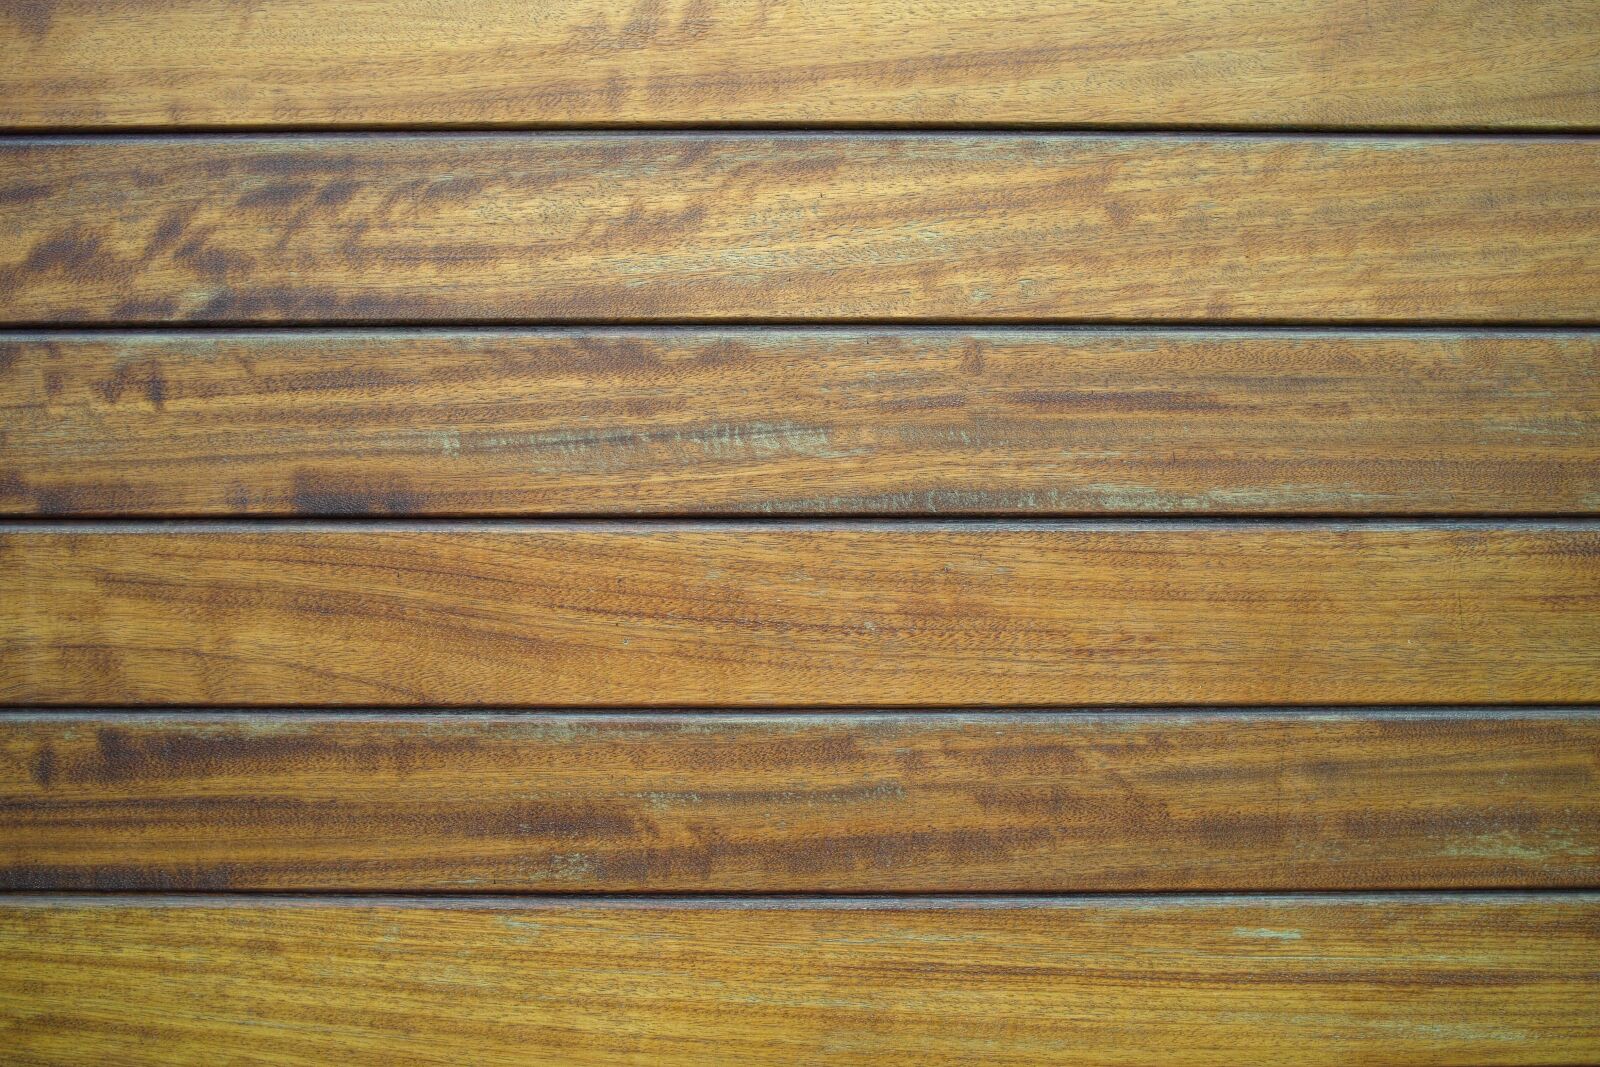 Sigma DP1 Merrill sample photo. Wood-fibre boards, wood, parquet photography